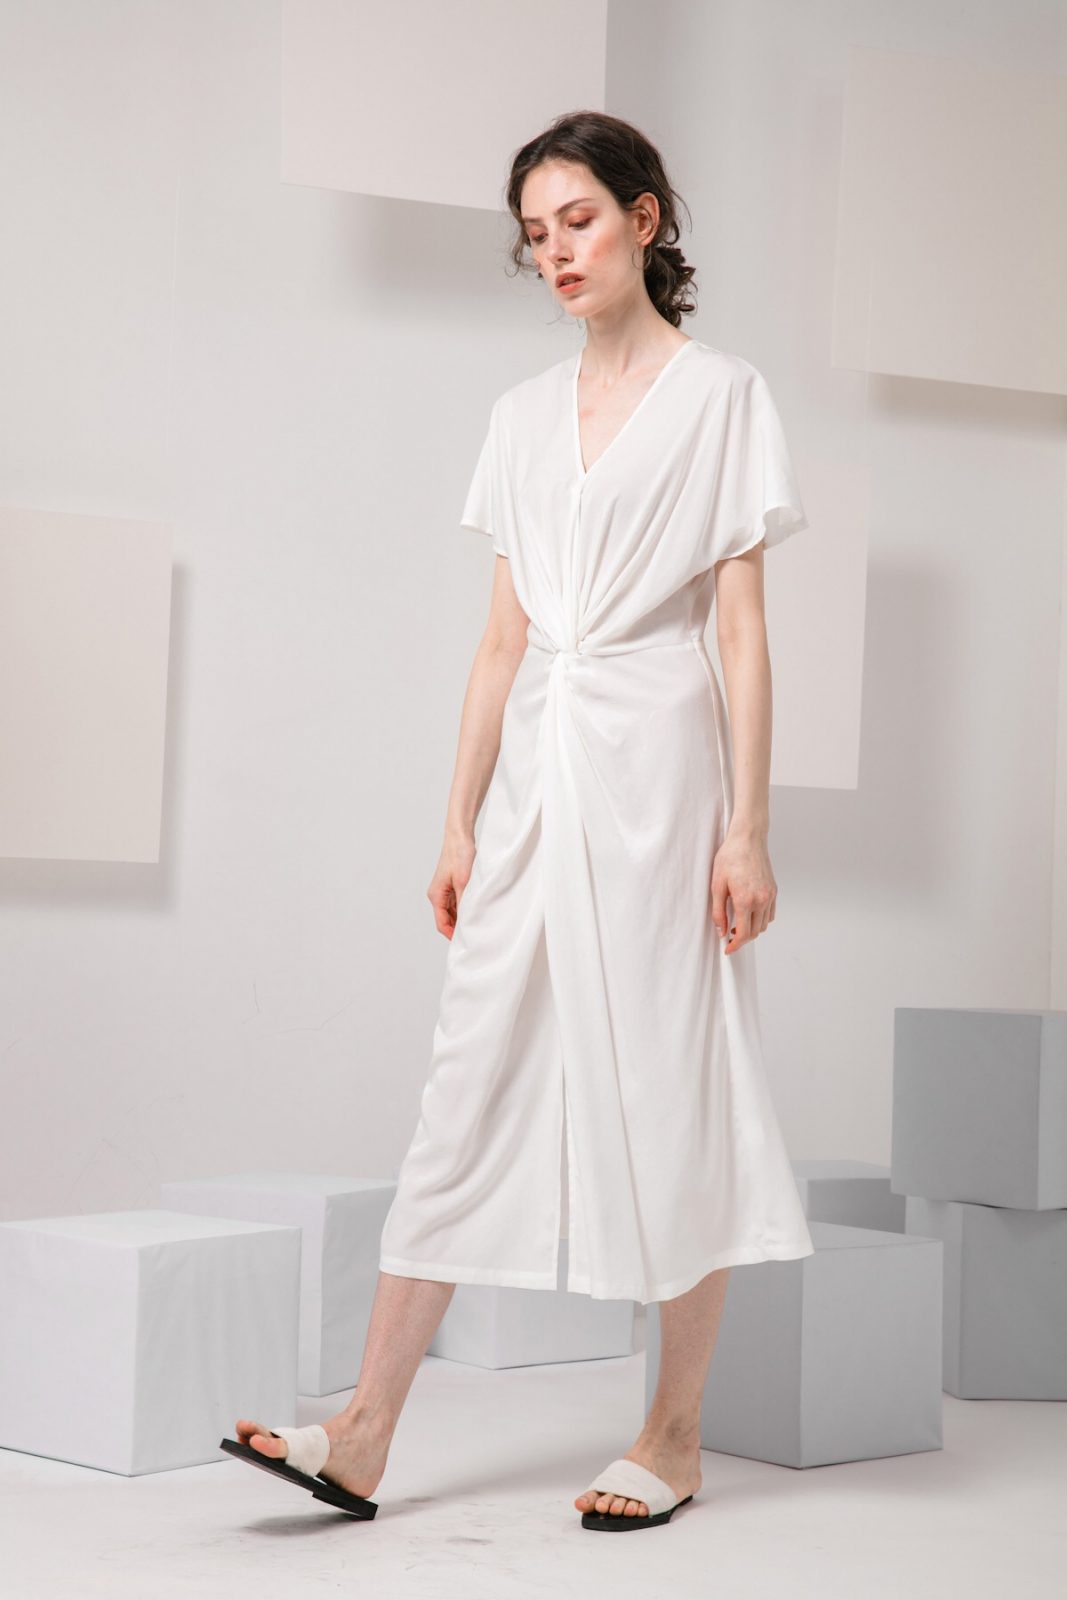 SKYE modern minimalist women clothing fashion Calla Dress white 3